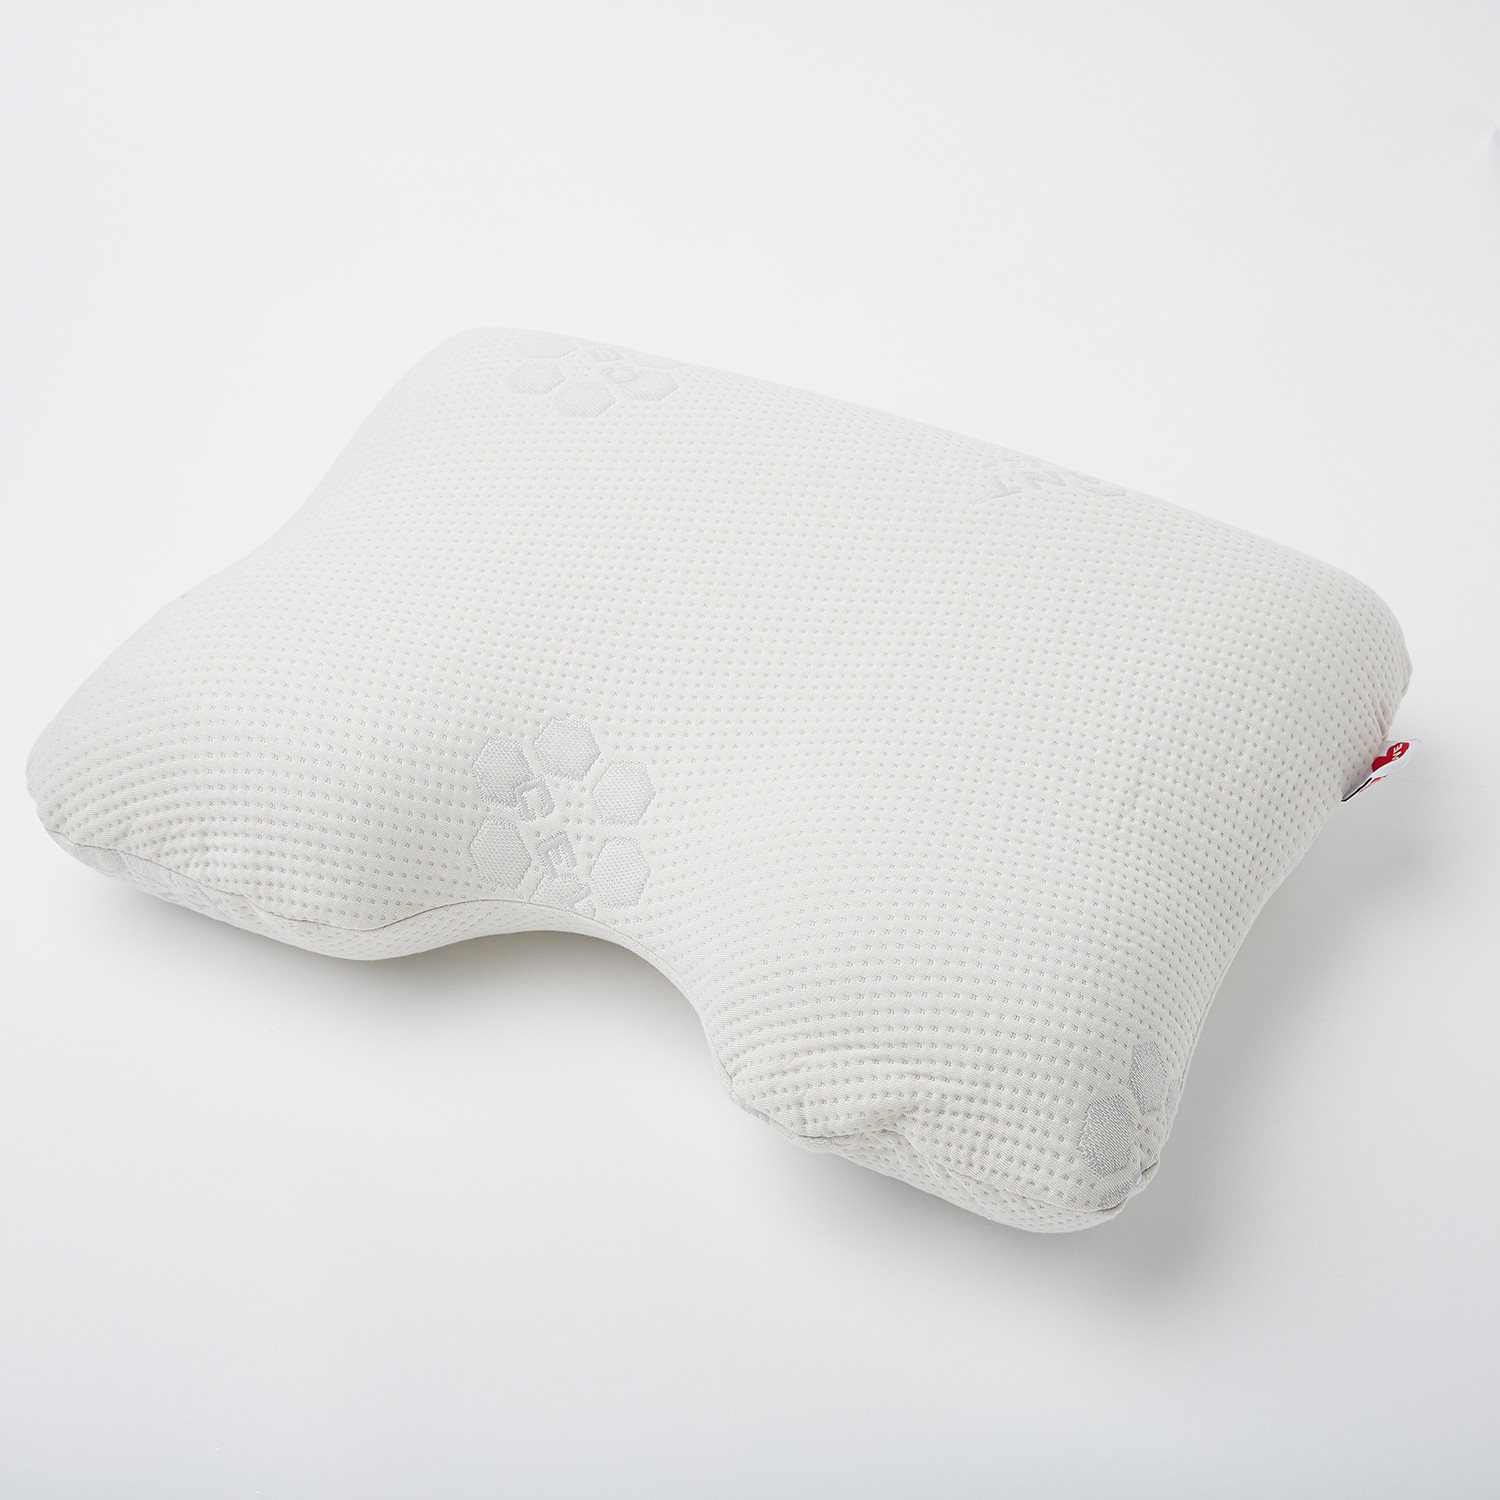 Neck + Head Ergonomic Memory Foam Pillow Visco Love Touch of Modern